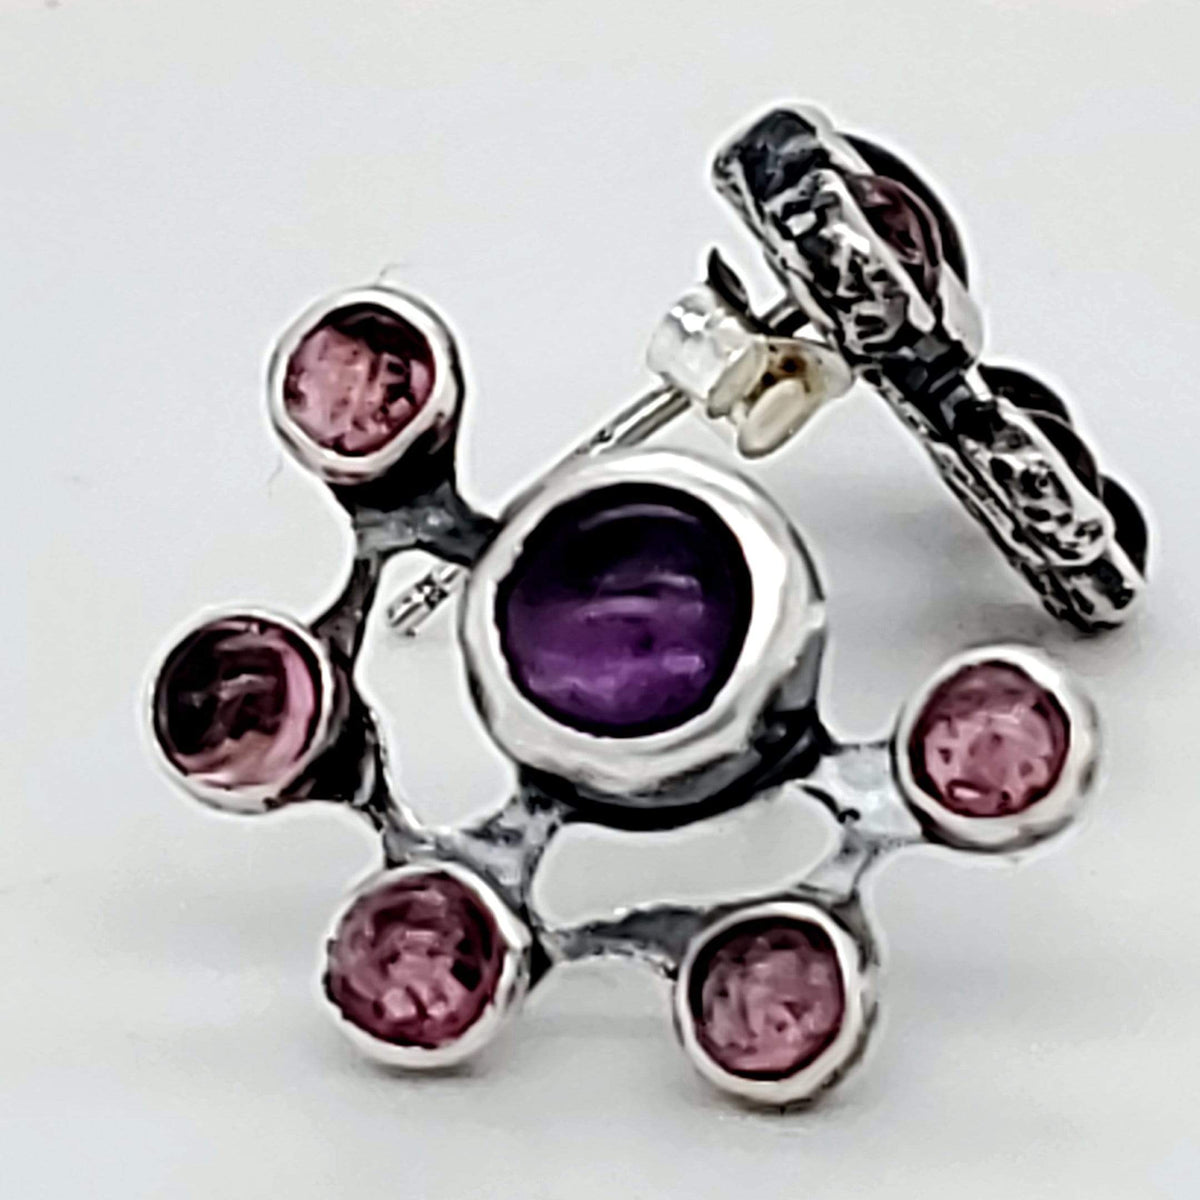 janet lasher Jewelry Earrings Pink Tourmaline and Amethyst Pinwheel Earrings